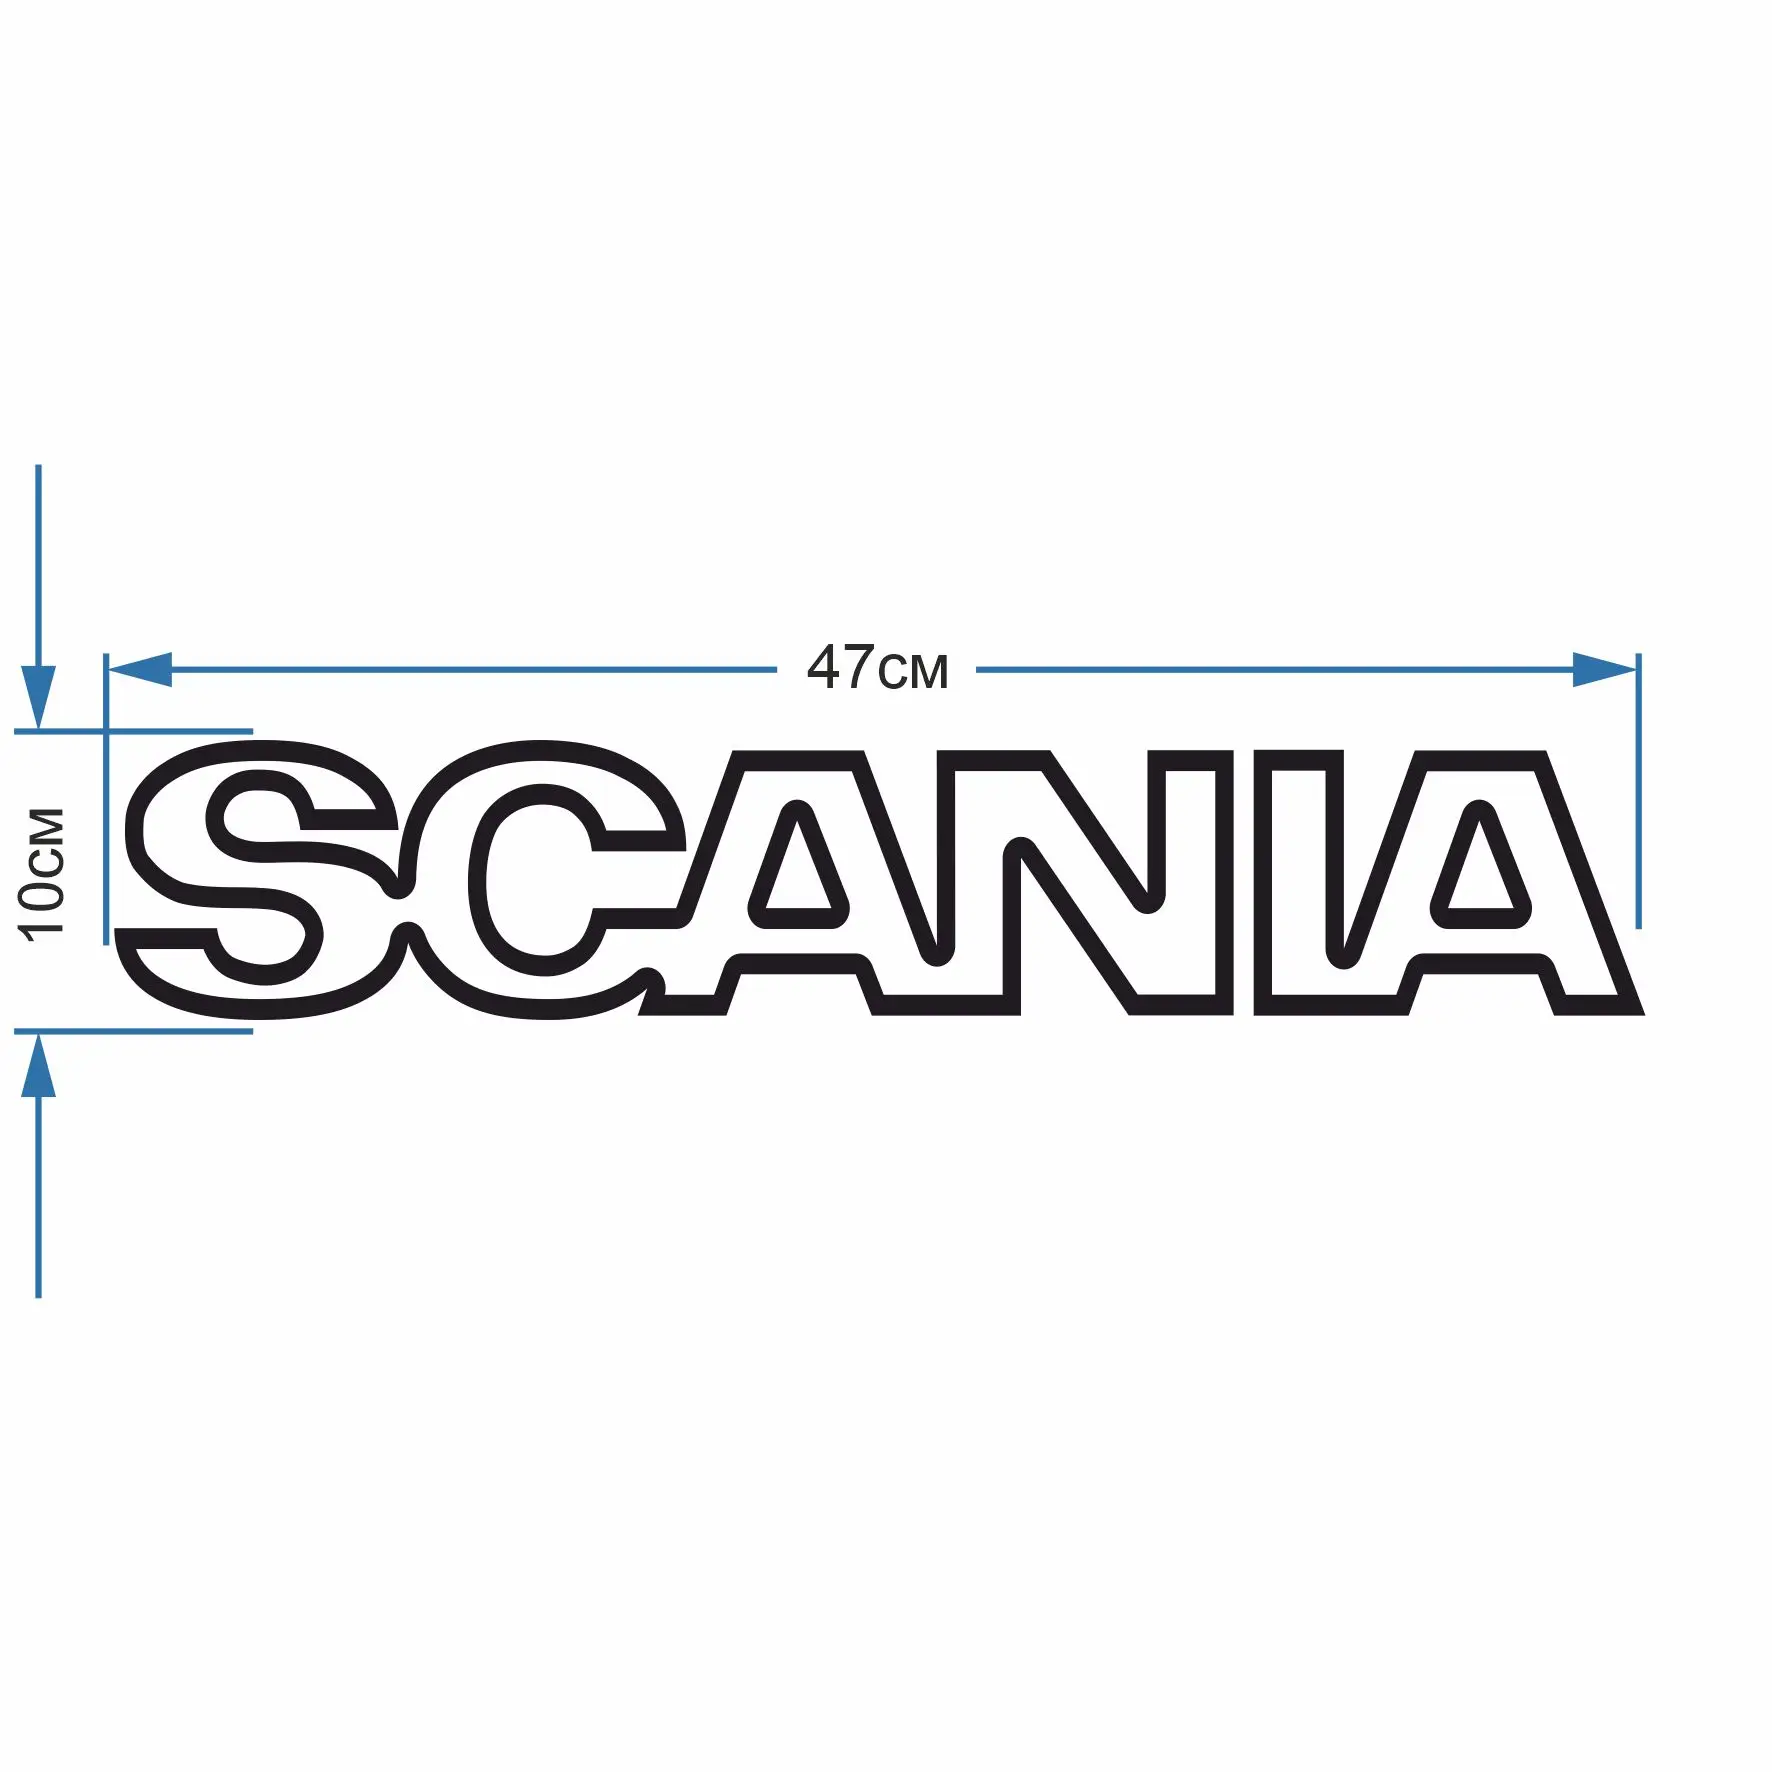 Sticker for Scania truck (window), set 2 pcs. On different sides of the  machine, для грузовых авто, скания, на окна комплект наклеек - AliExpress